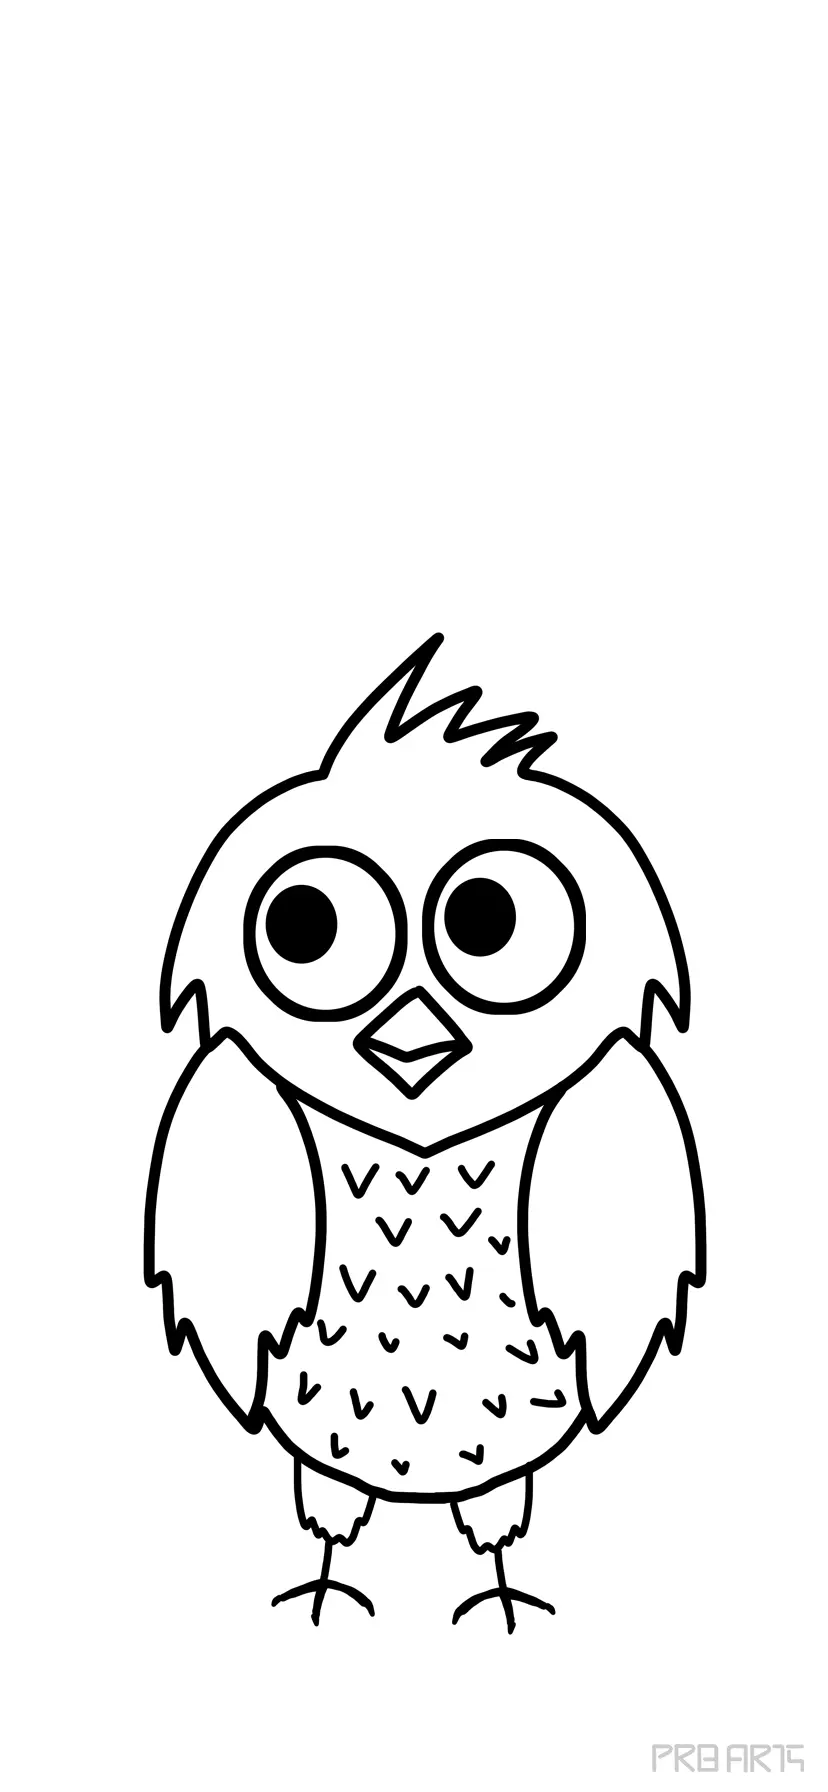 Easy Owl Drawing Tutorial - PRB ARTS